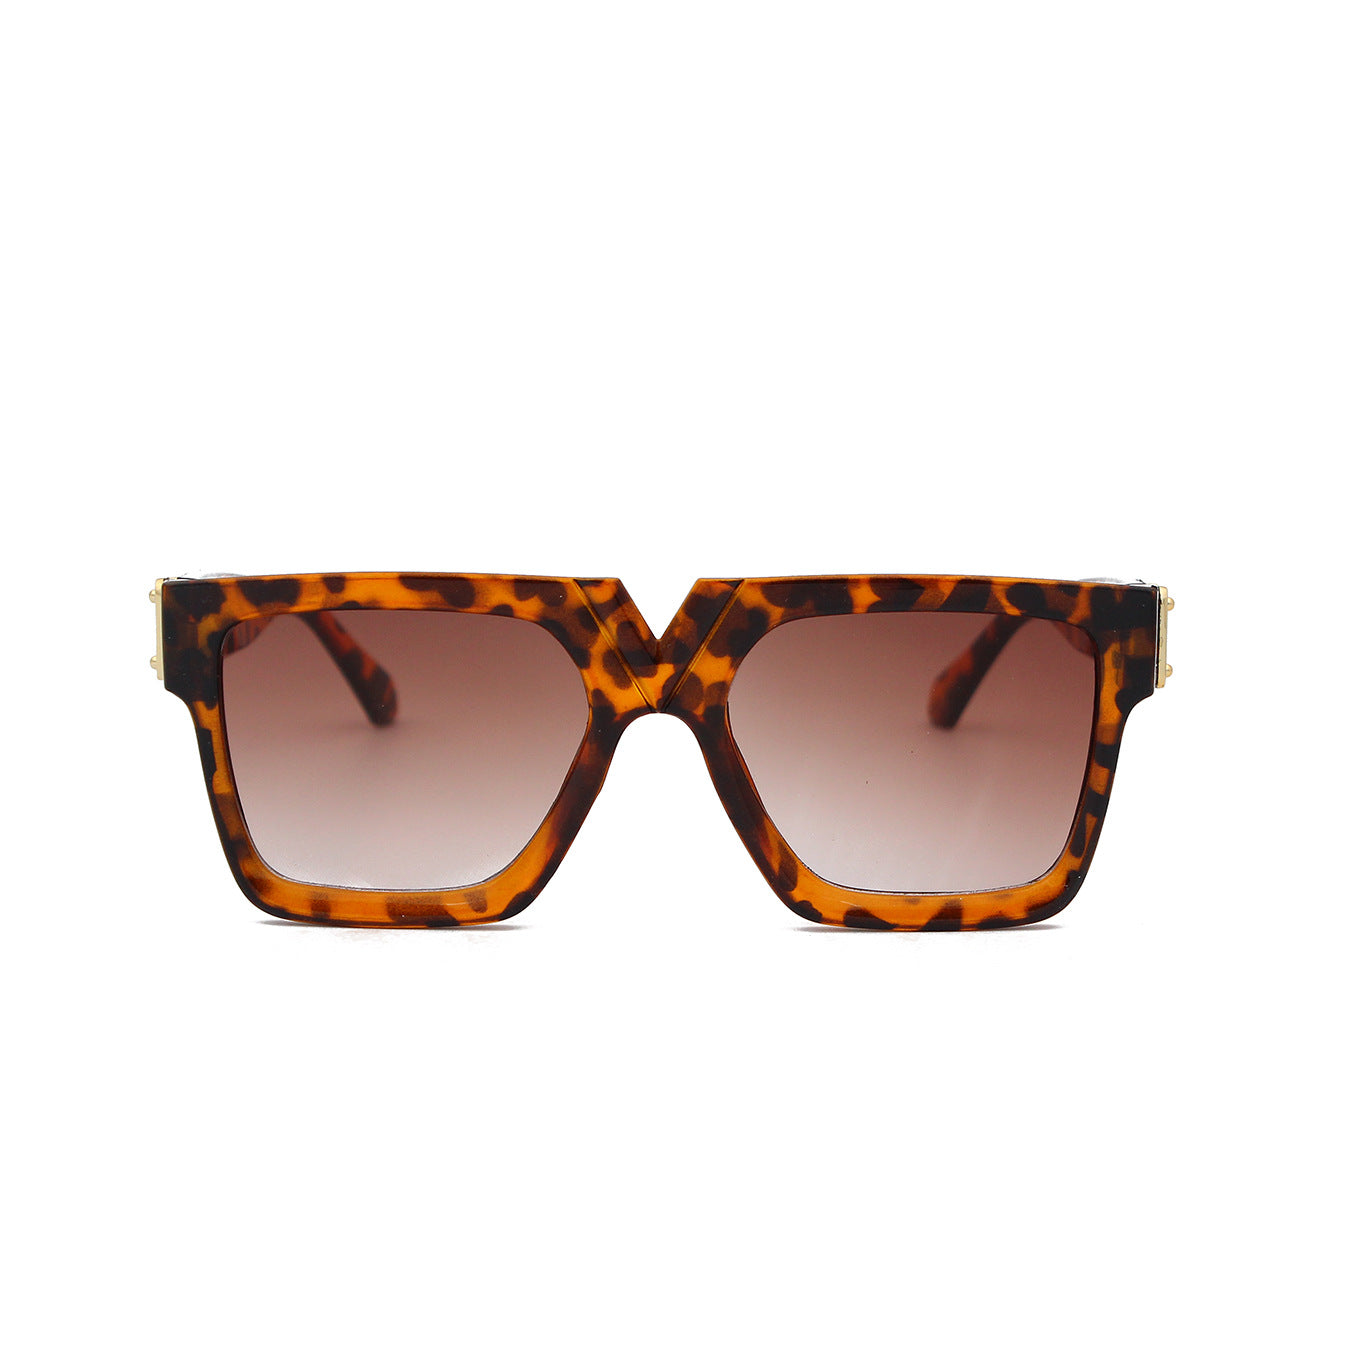 Square thick frame sunglasses - Sunglasses -  Trend Goods